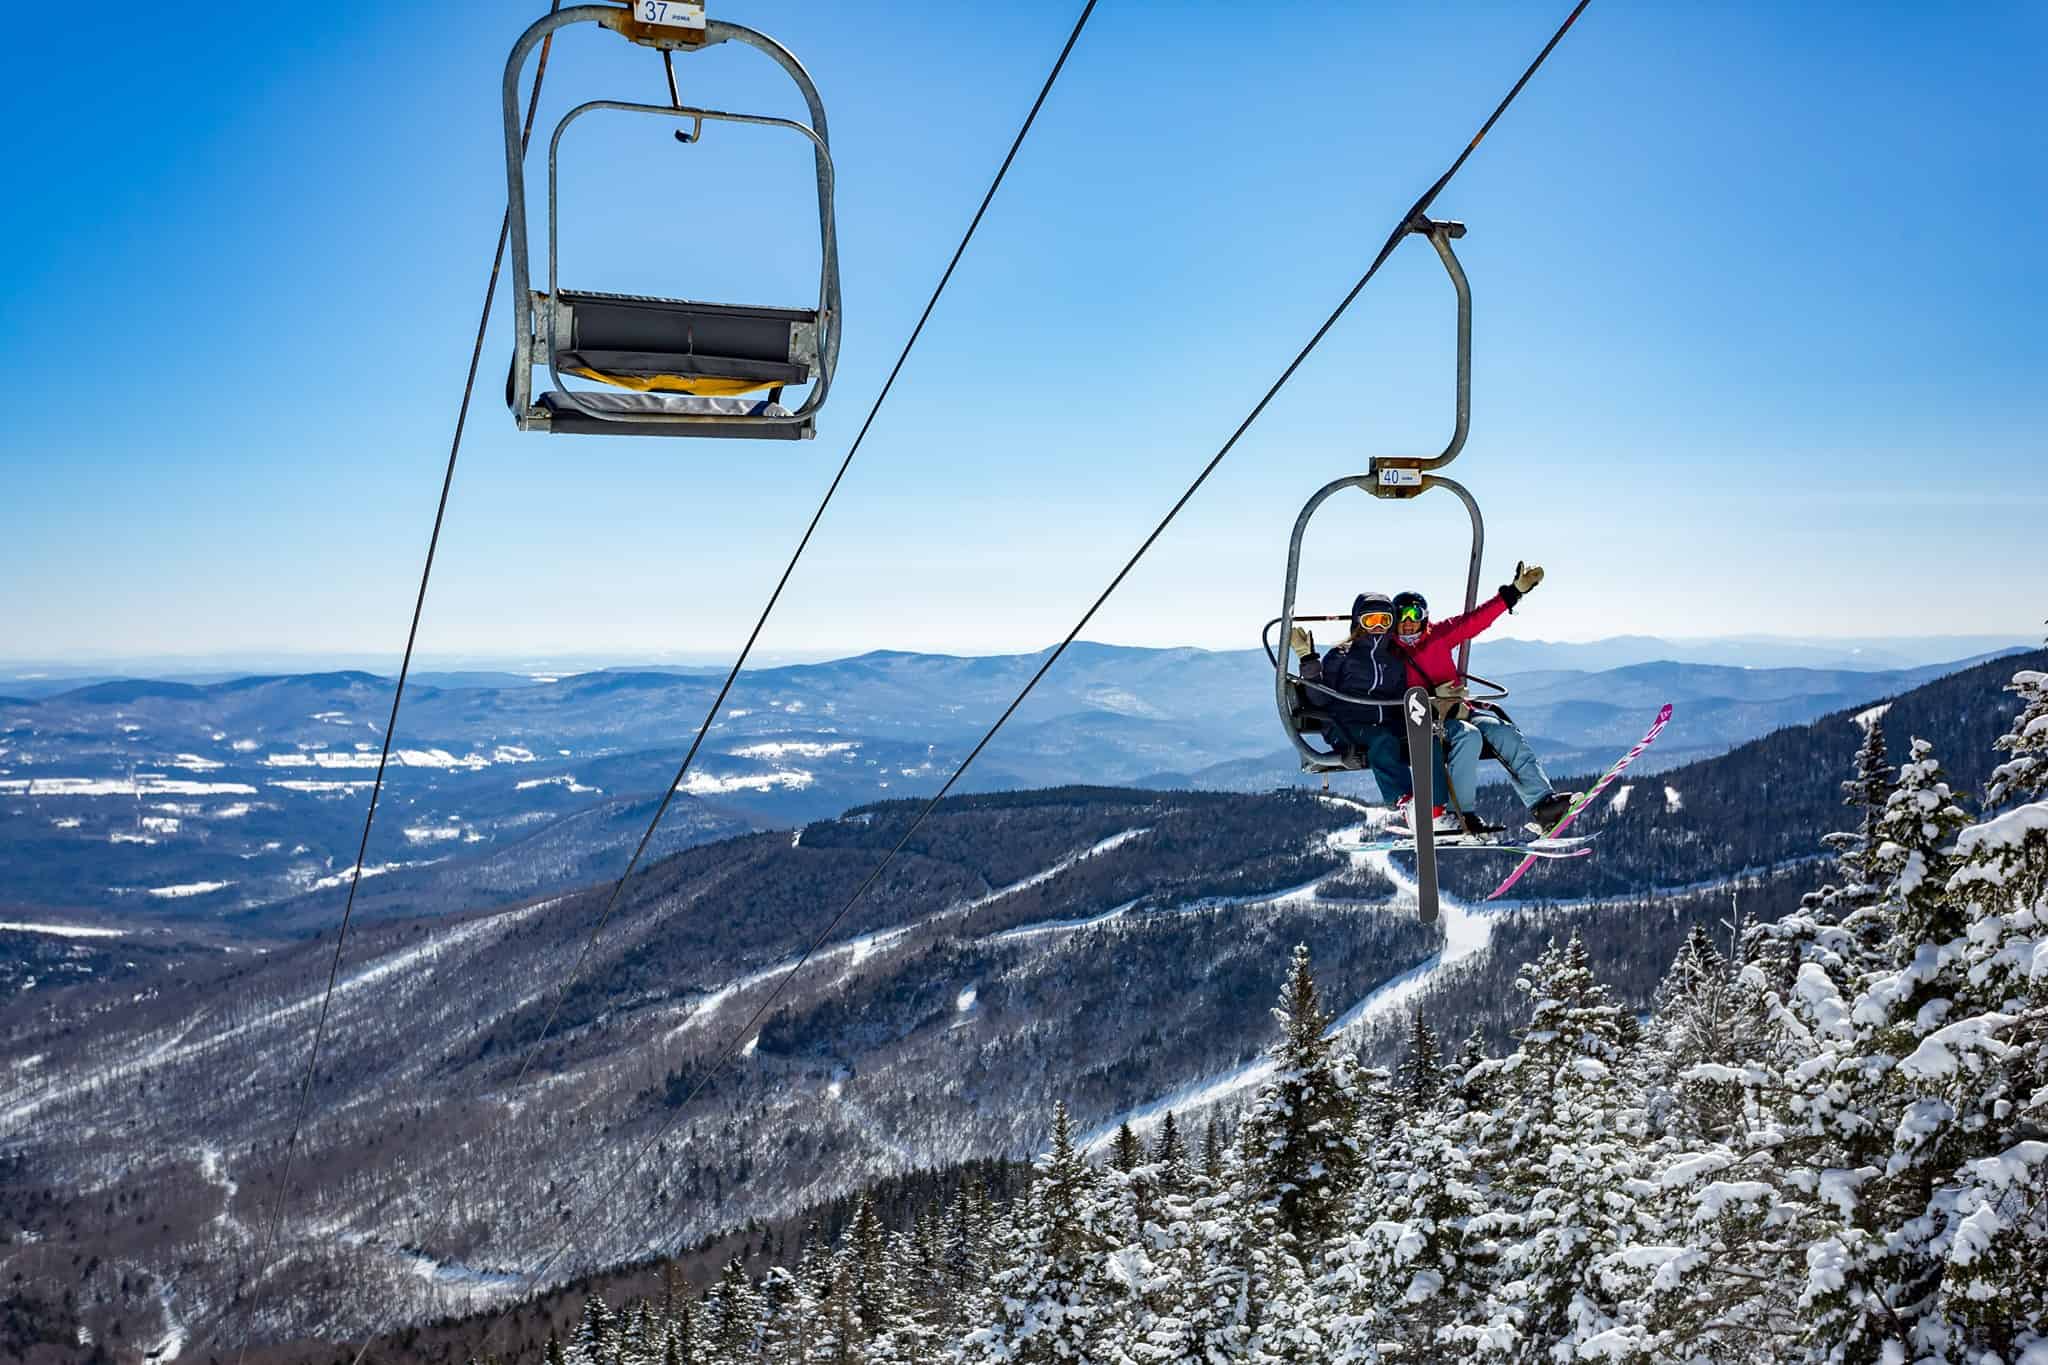 Sugarbush Resort - Skiing Couple on Chairlift